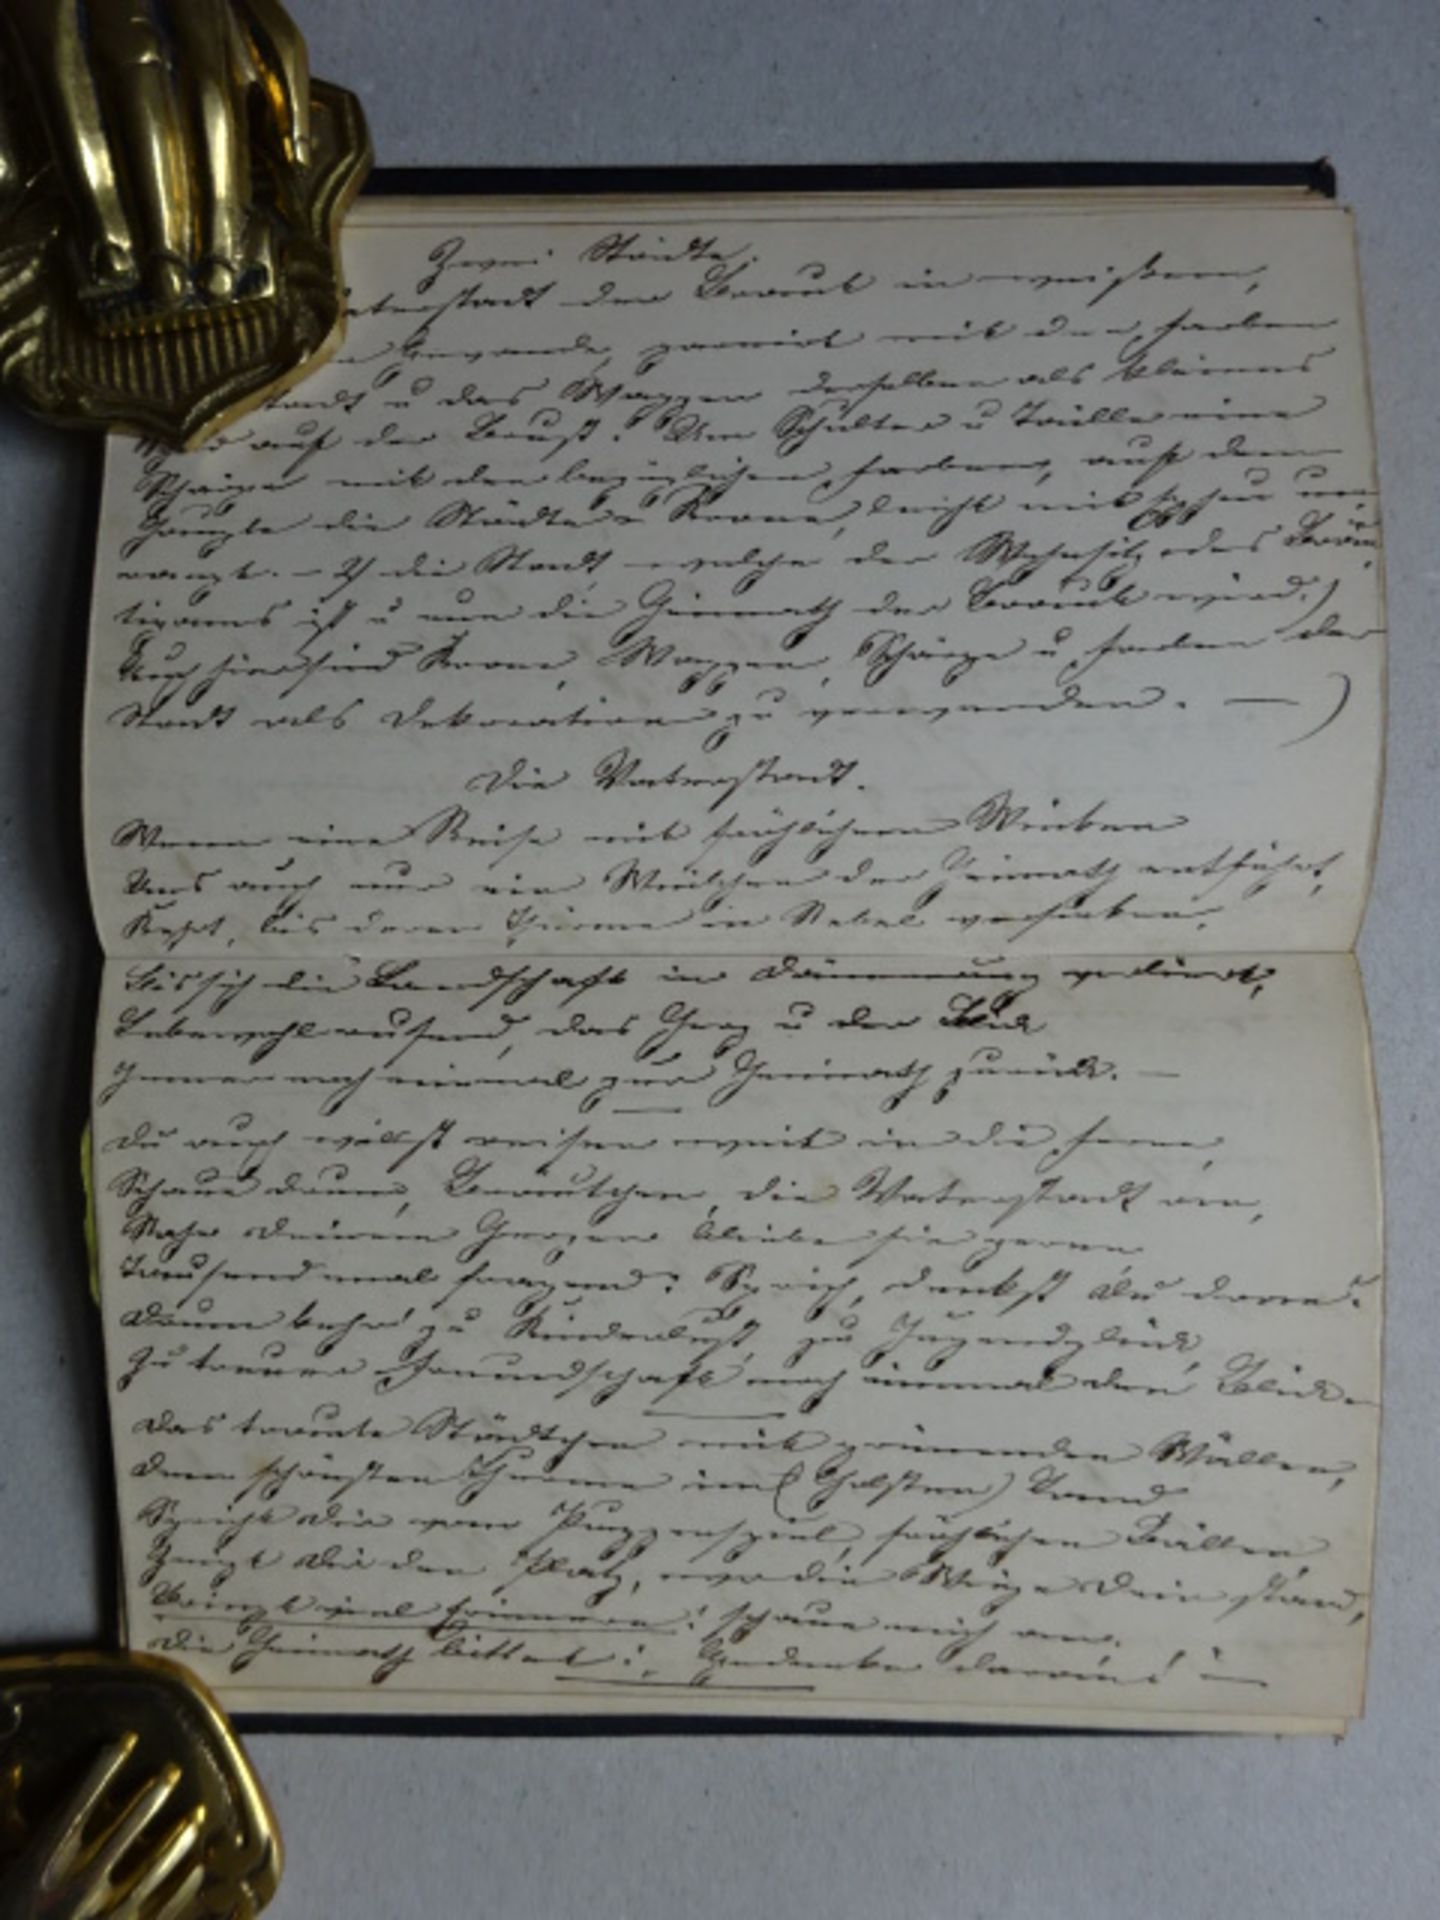 Poesie-Album Kiel 1855 - Bild 5 aus 7